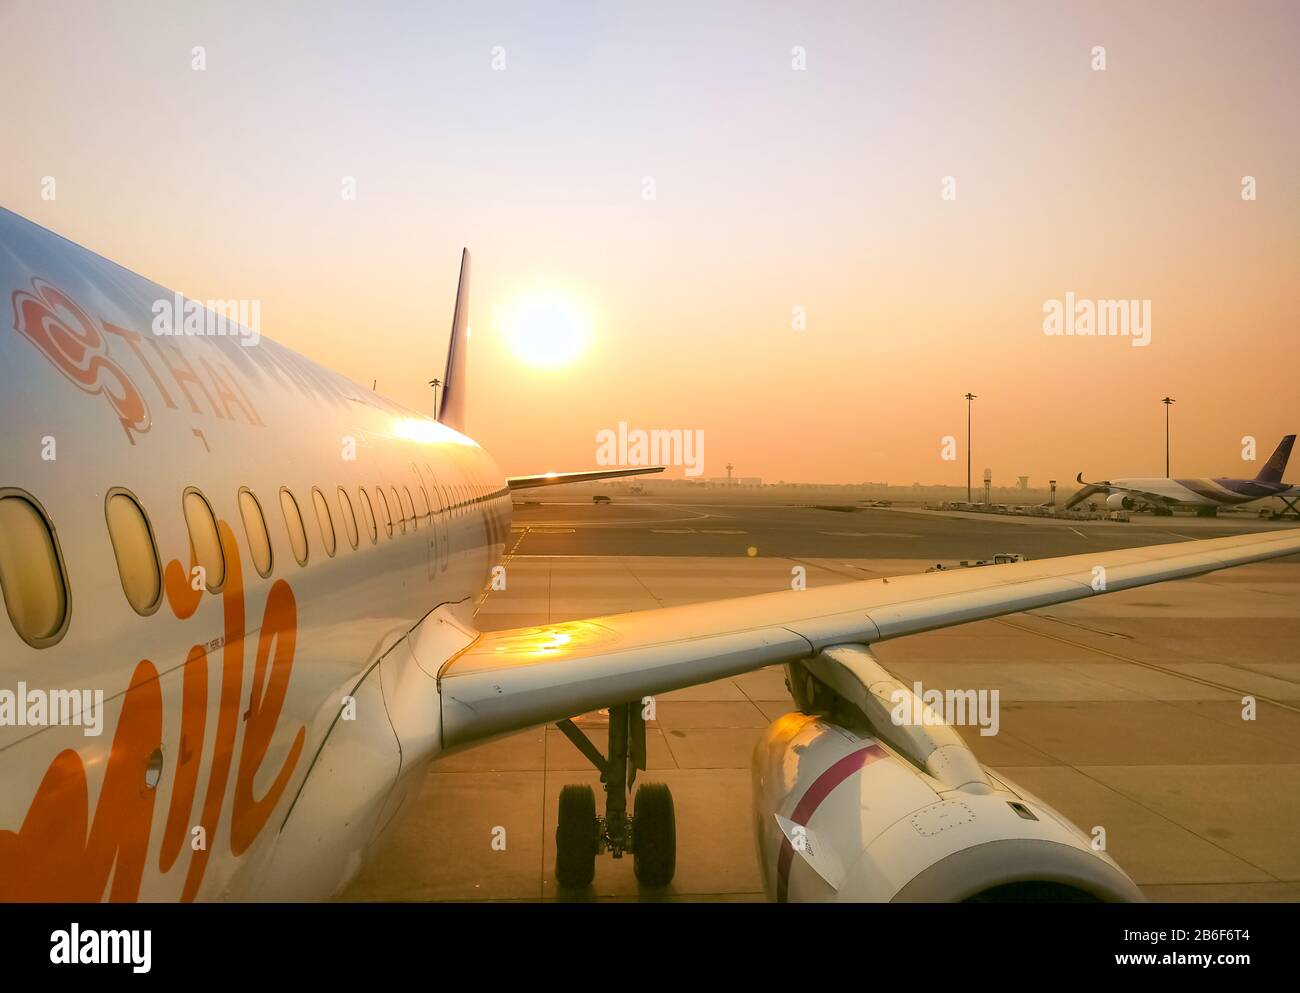 Bangkok, THAILAND - FEBRUAR 2020: Thai Smile Airways. Passagierflugzeug am Flughafen Suvarnabhumi geparkt. Nahaufnahme Flugzeugflügel mit goldenem Sonnenaufgang Himmel Stockfoto